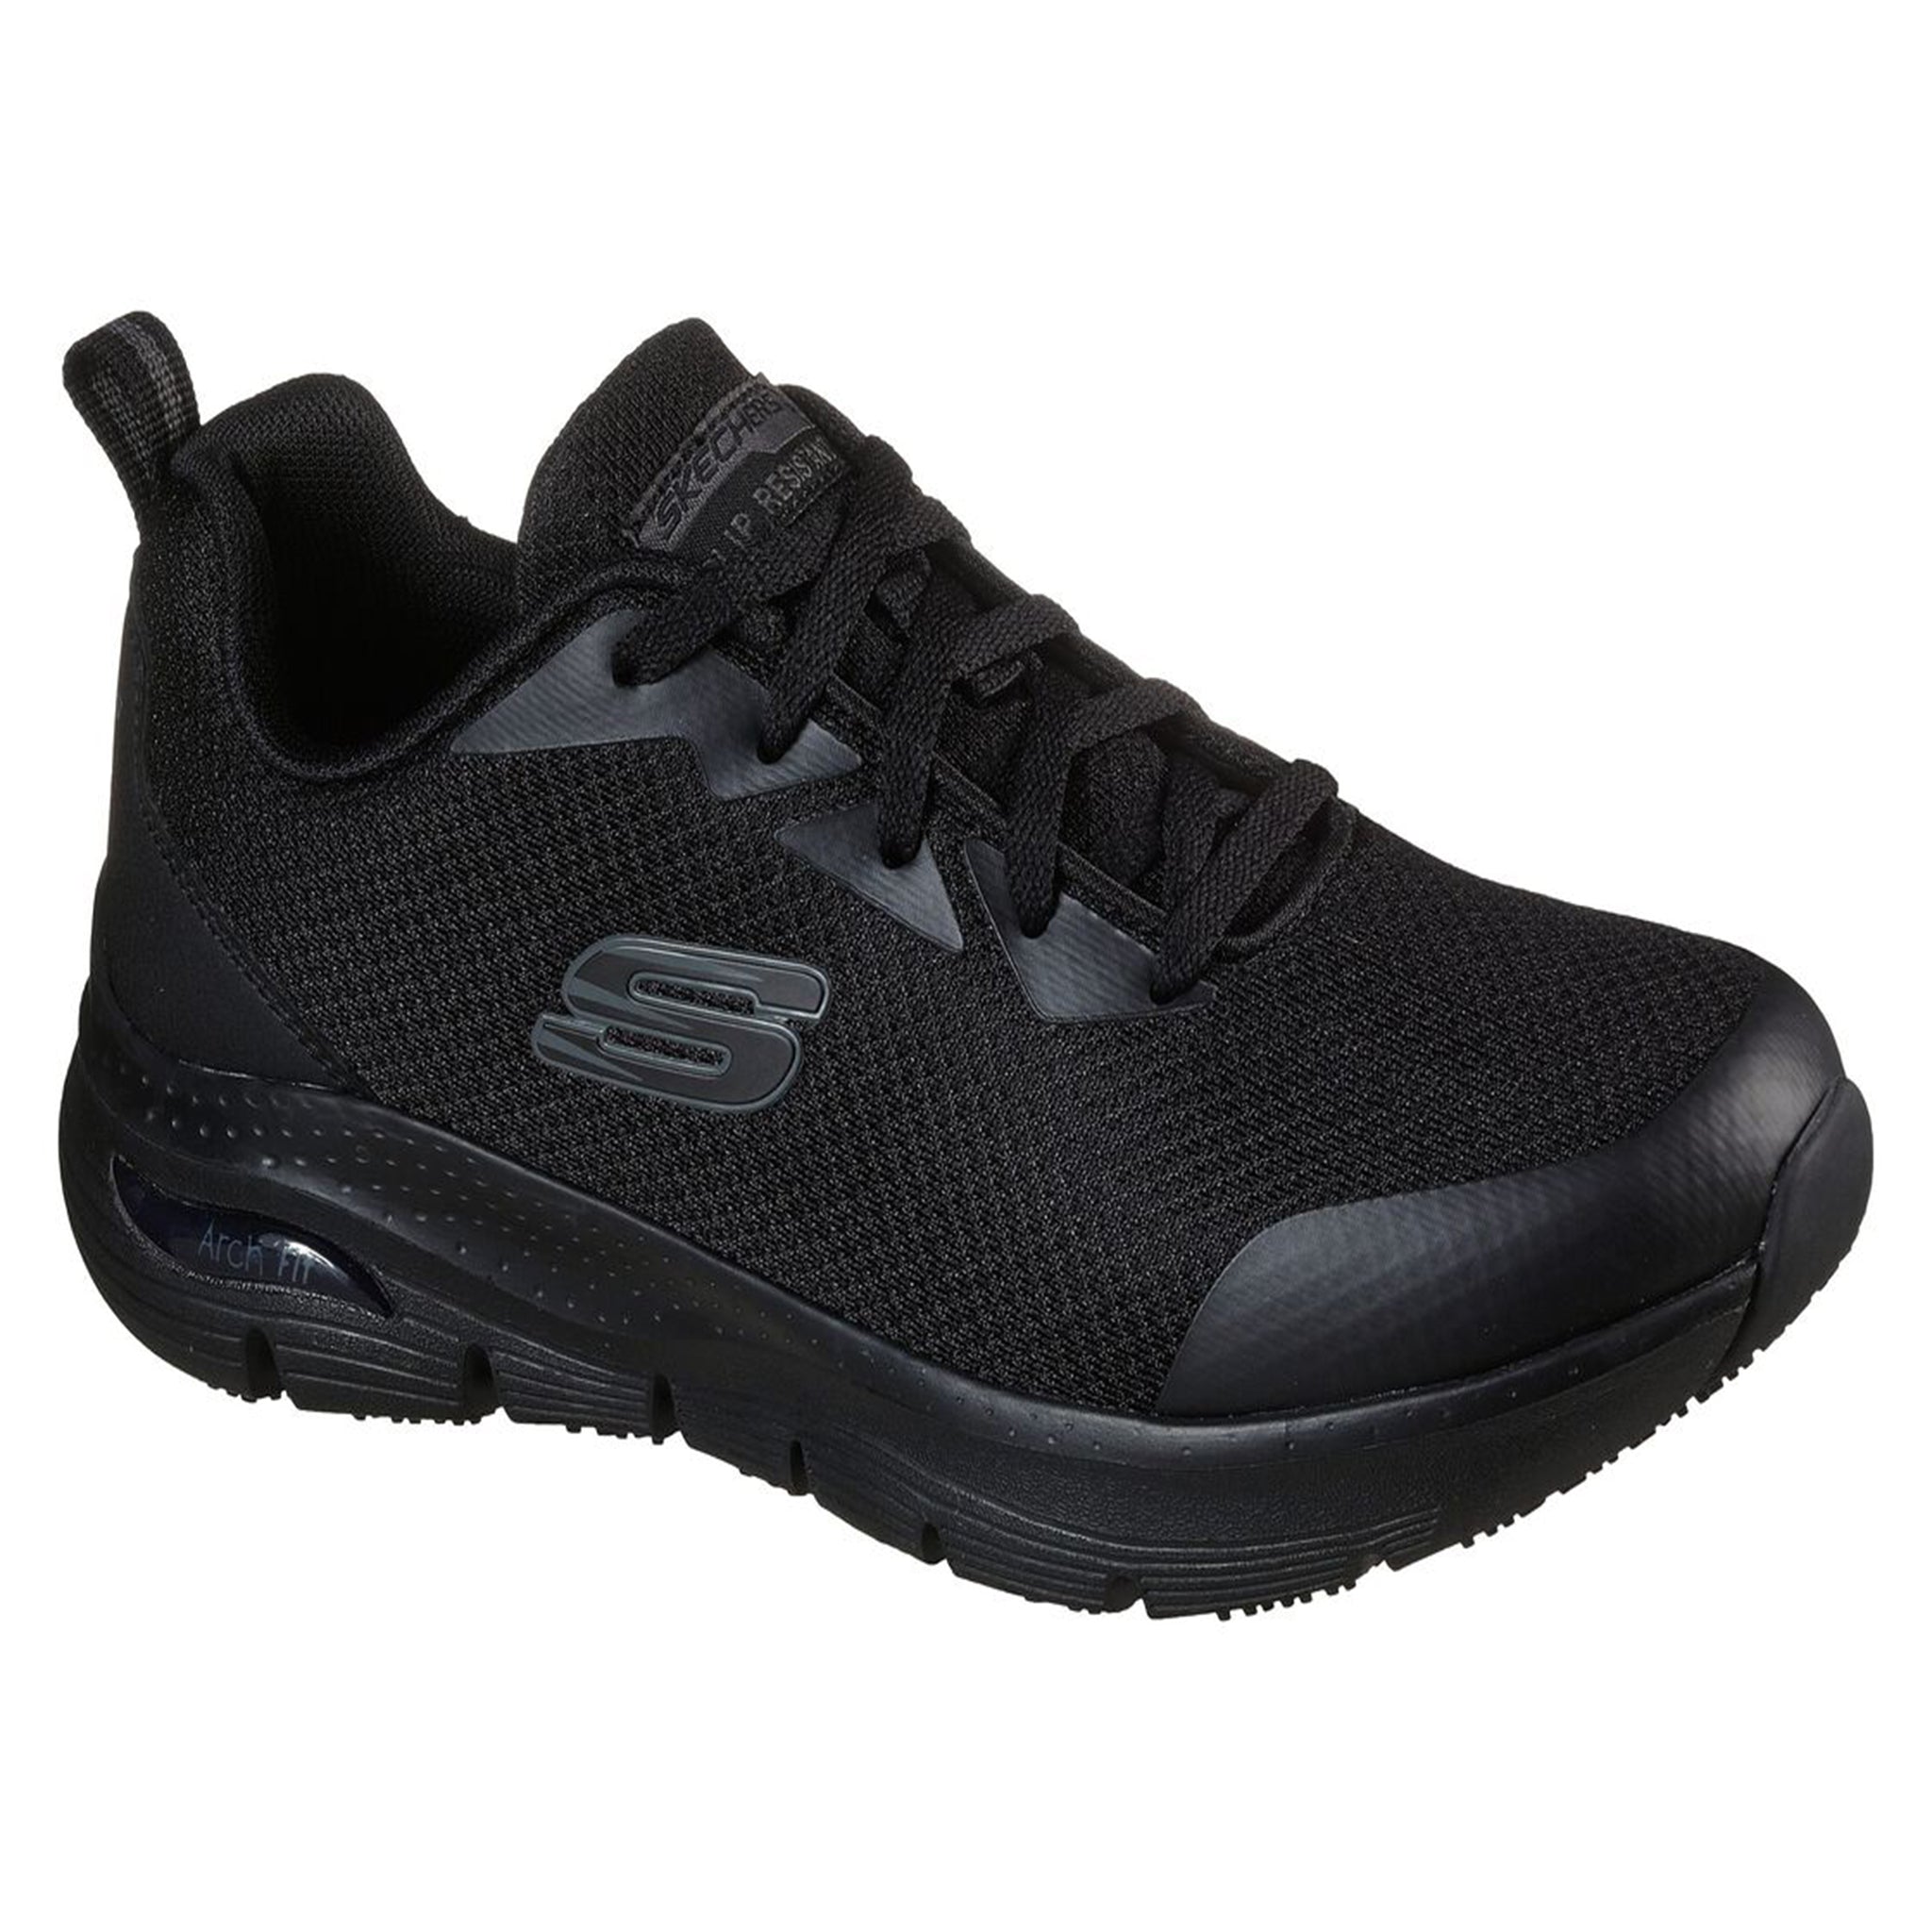 Skechers Women's 108019 Arch Fit SR Black Slip Resistant Work Shoes | eBay